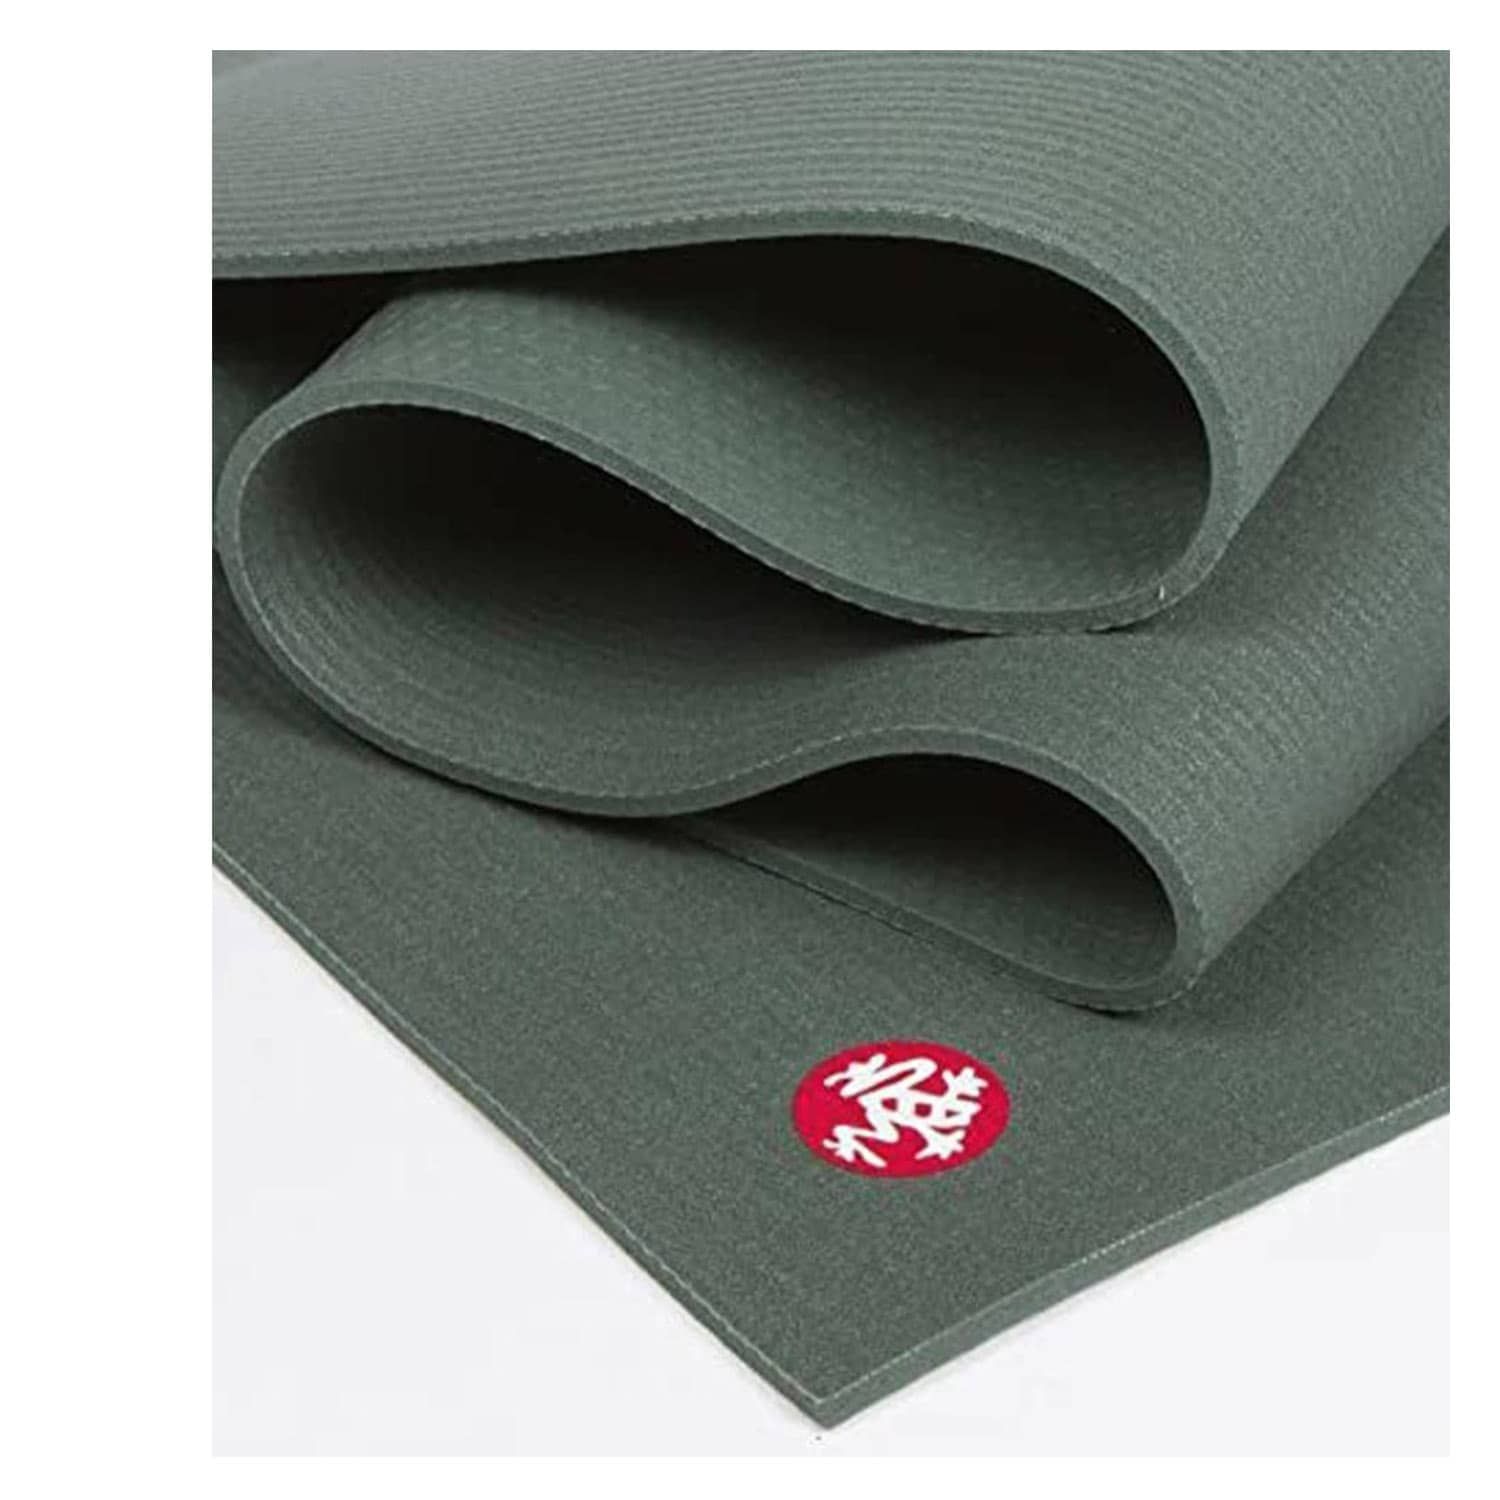 Manduka Pro Squared - Yoga Mat, Buy online